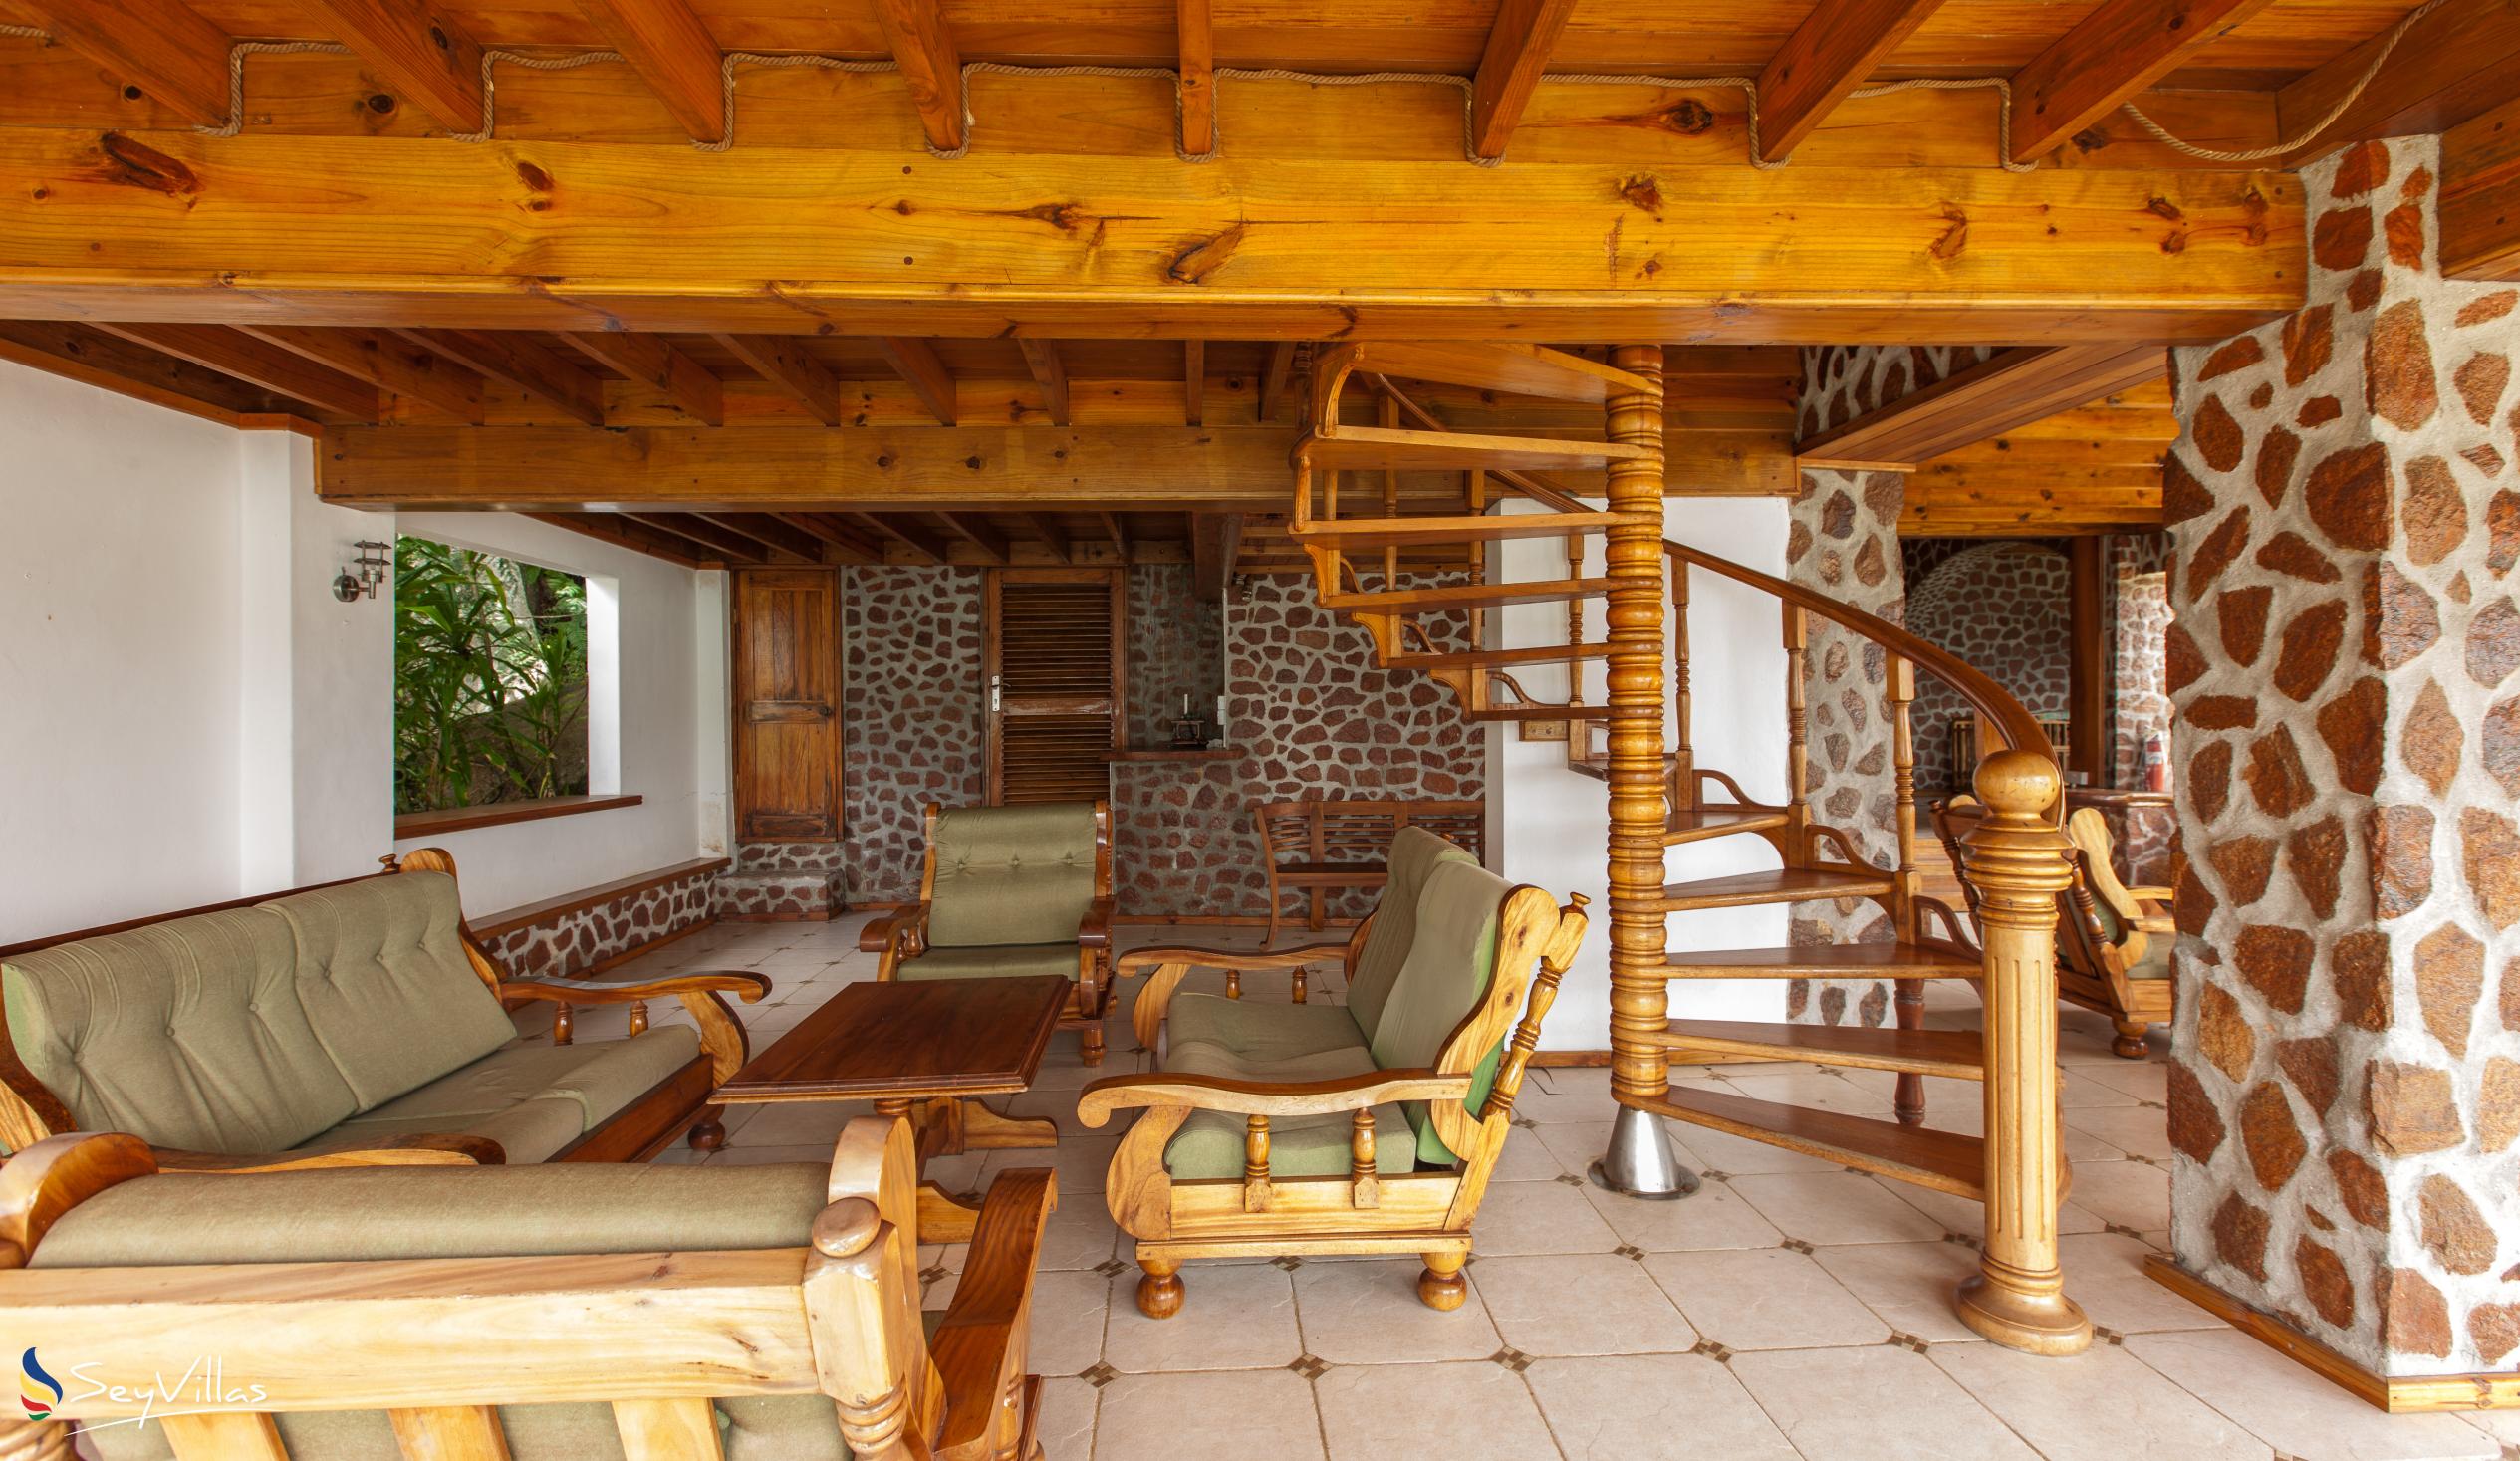 Photo 34: Colibri Guesthouse - Indoor area - Praslin (Seychelles)